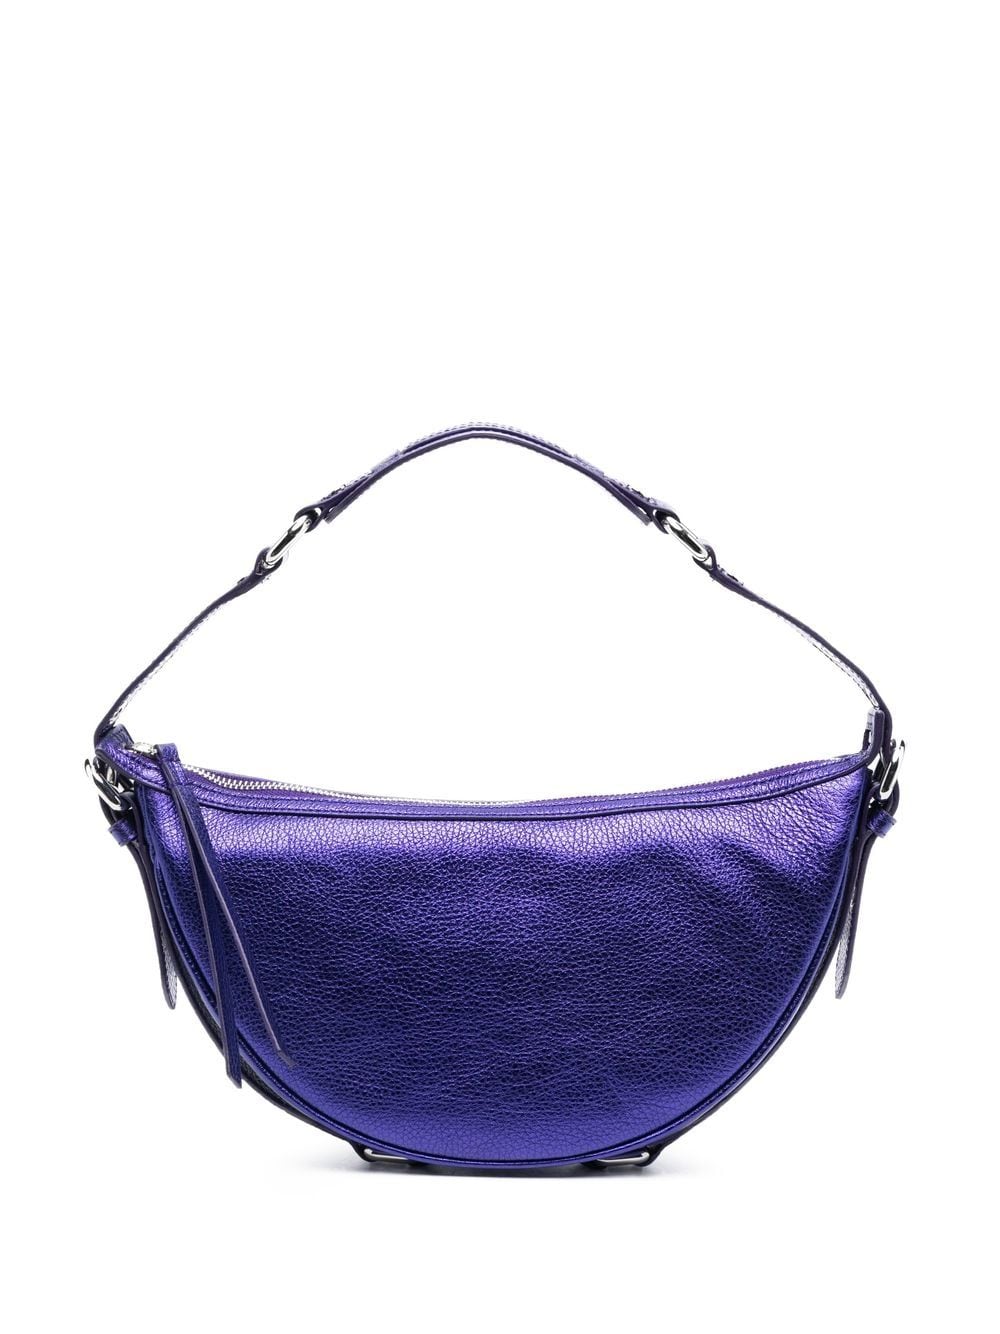 BY FAR pebble-texture leather shoulder bag - Purple von BY FAR